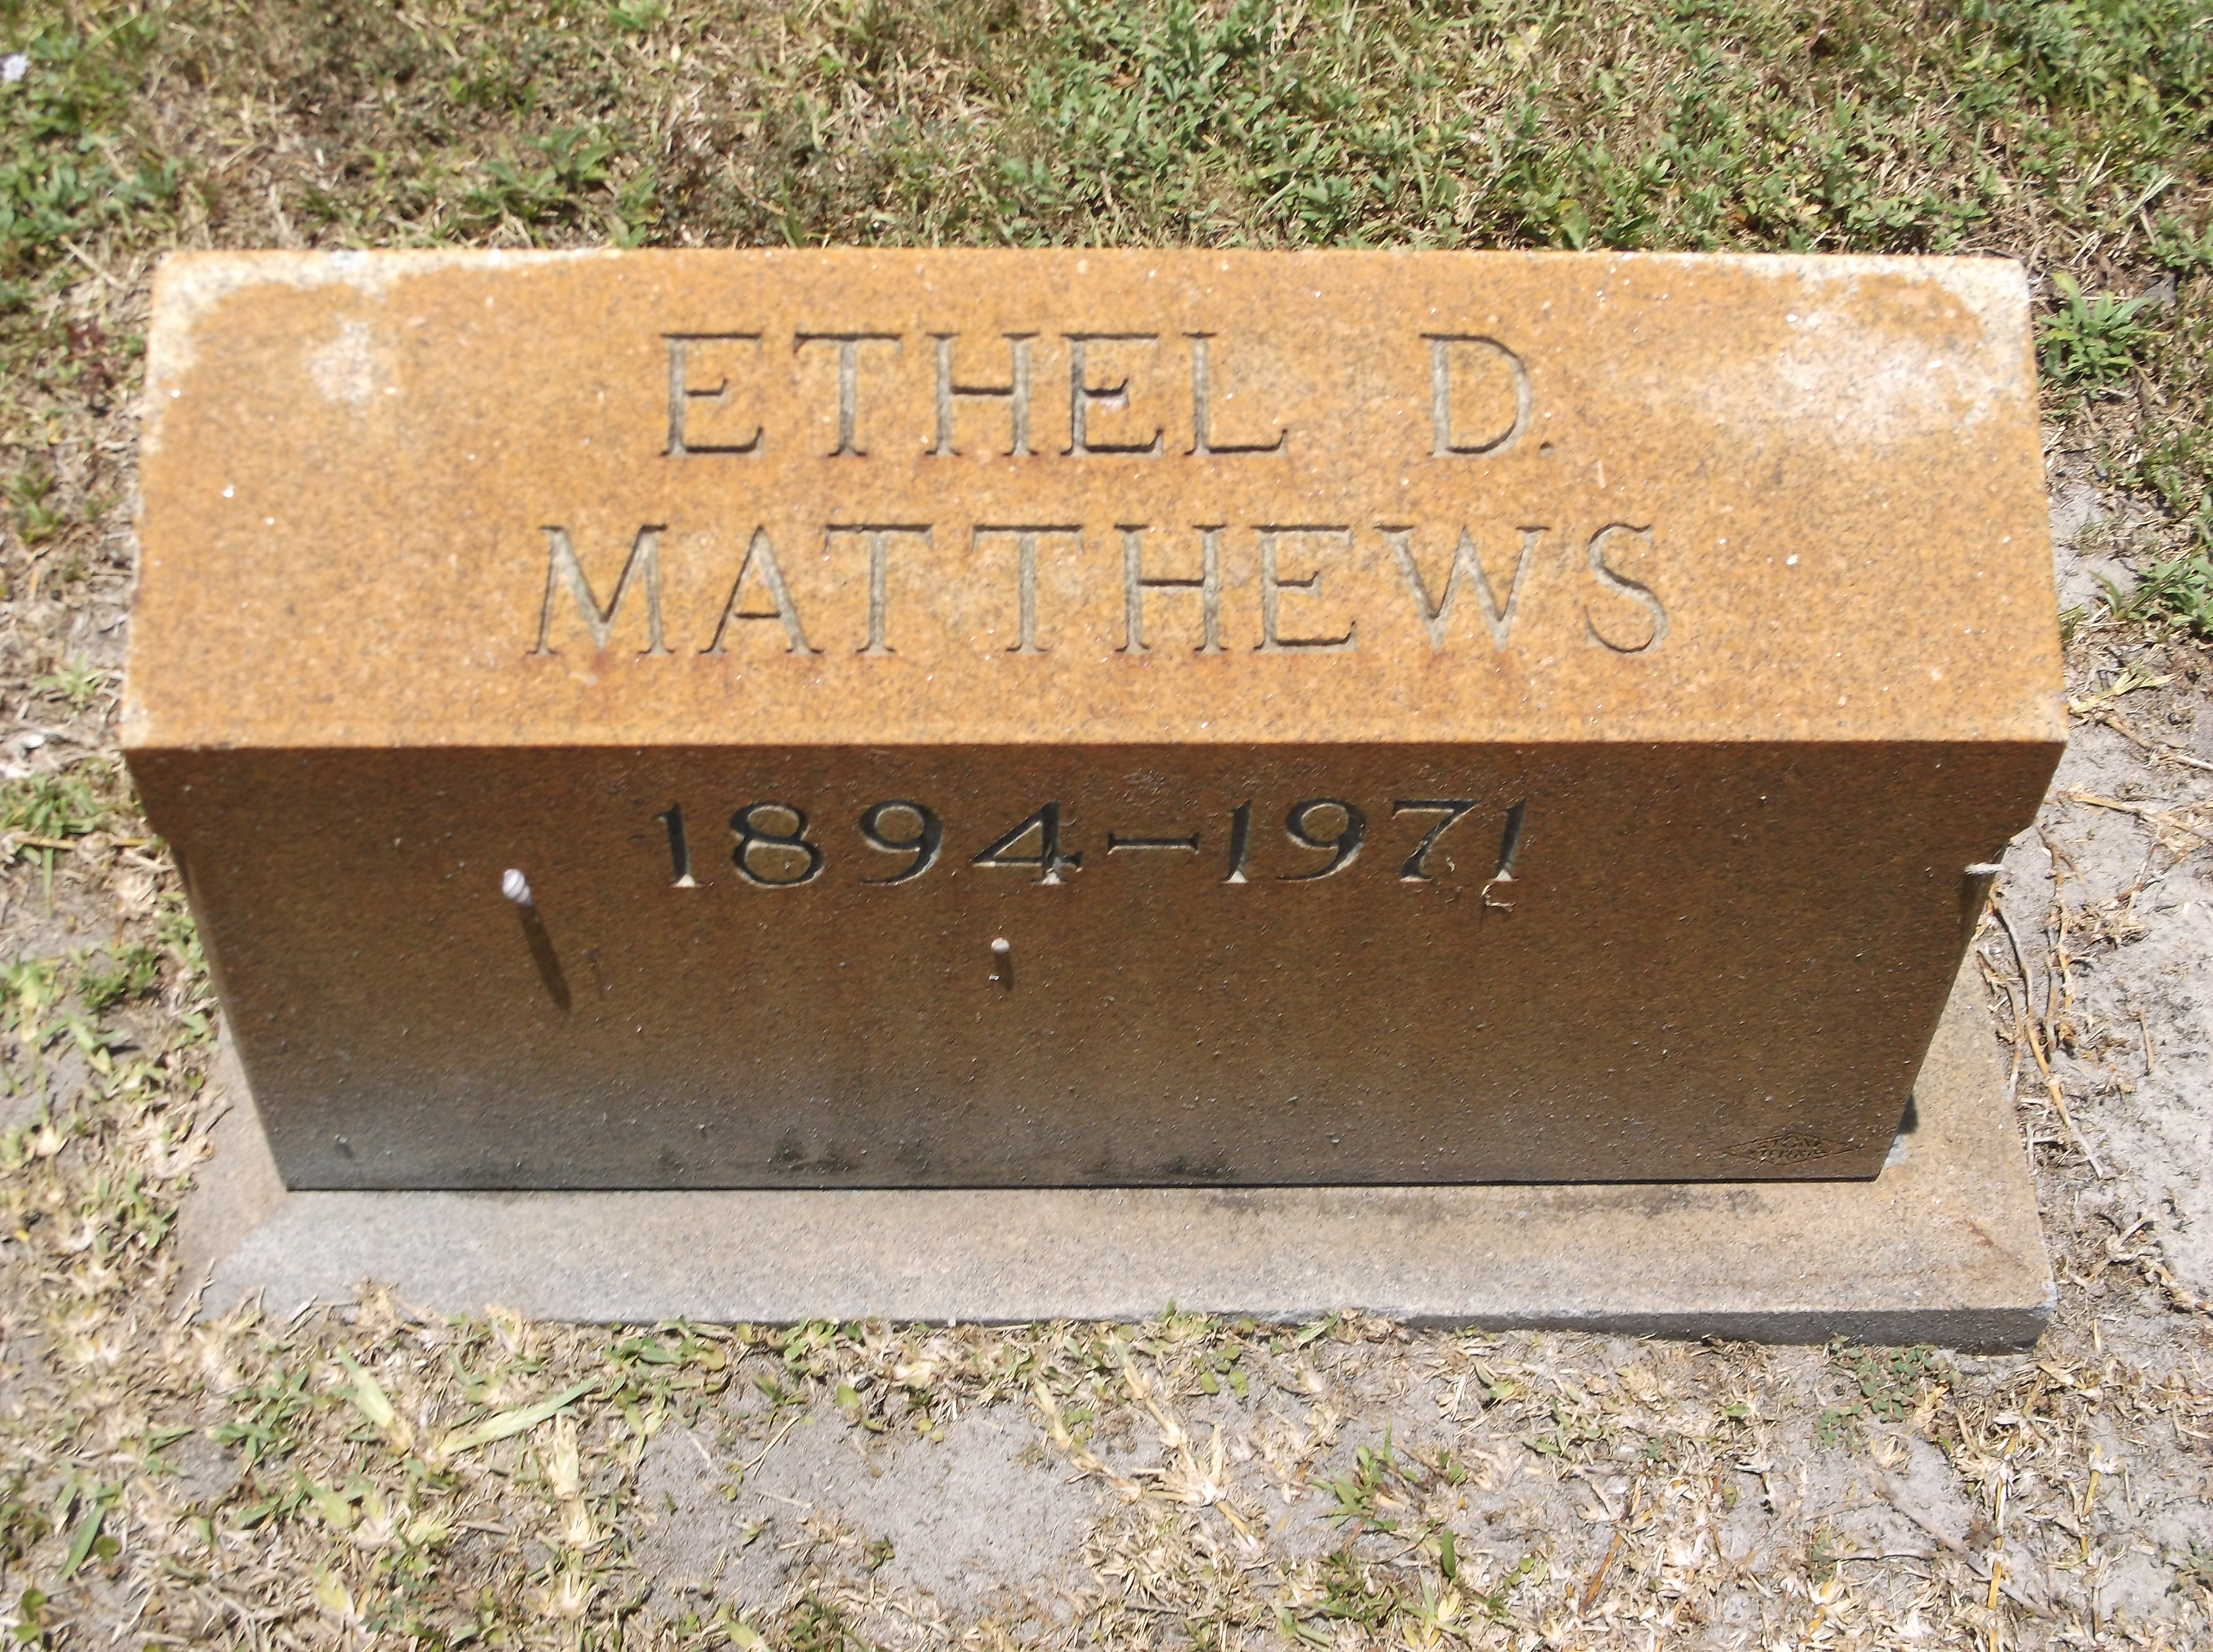 Ethel D Matthews